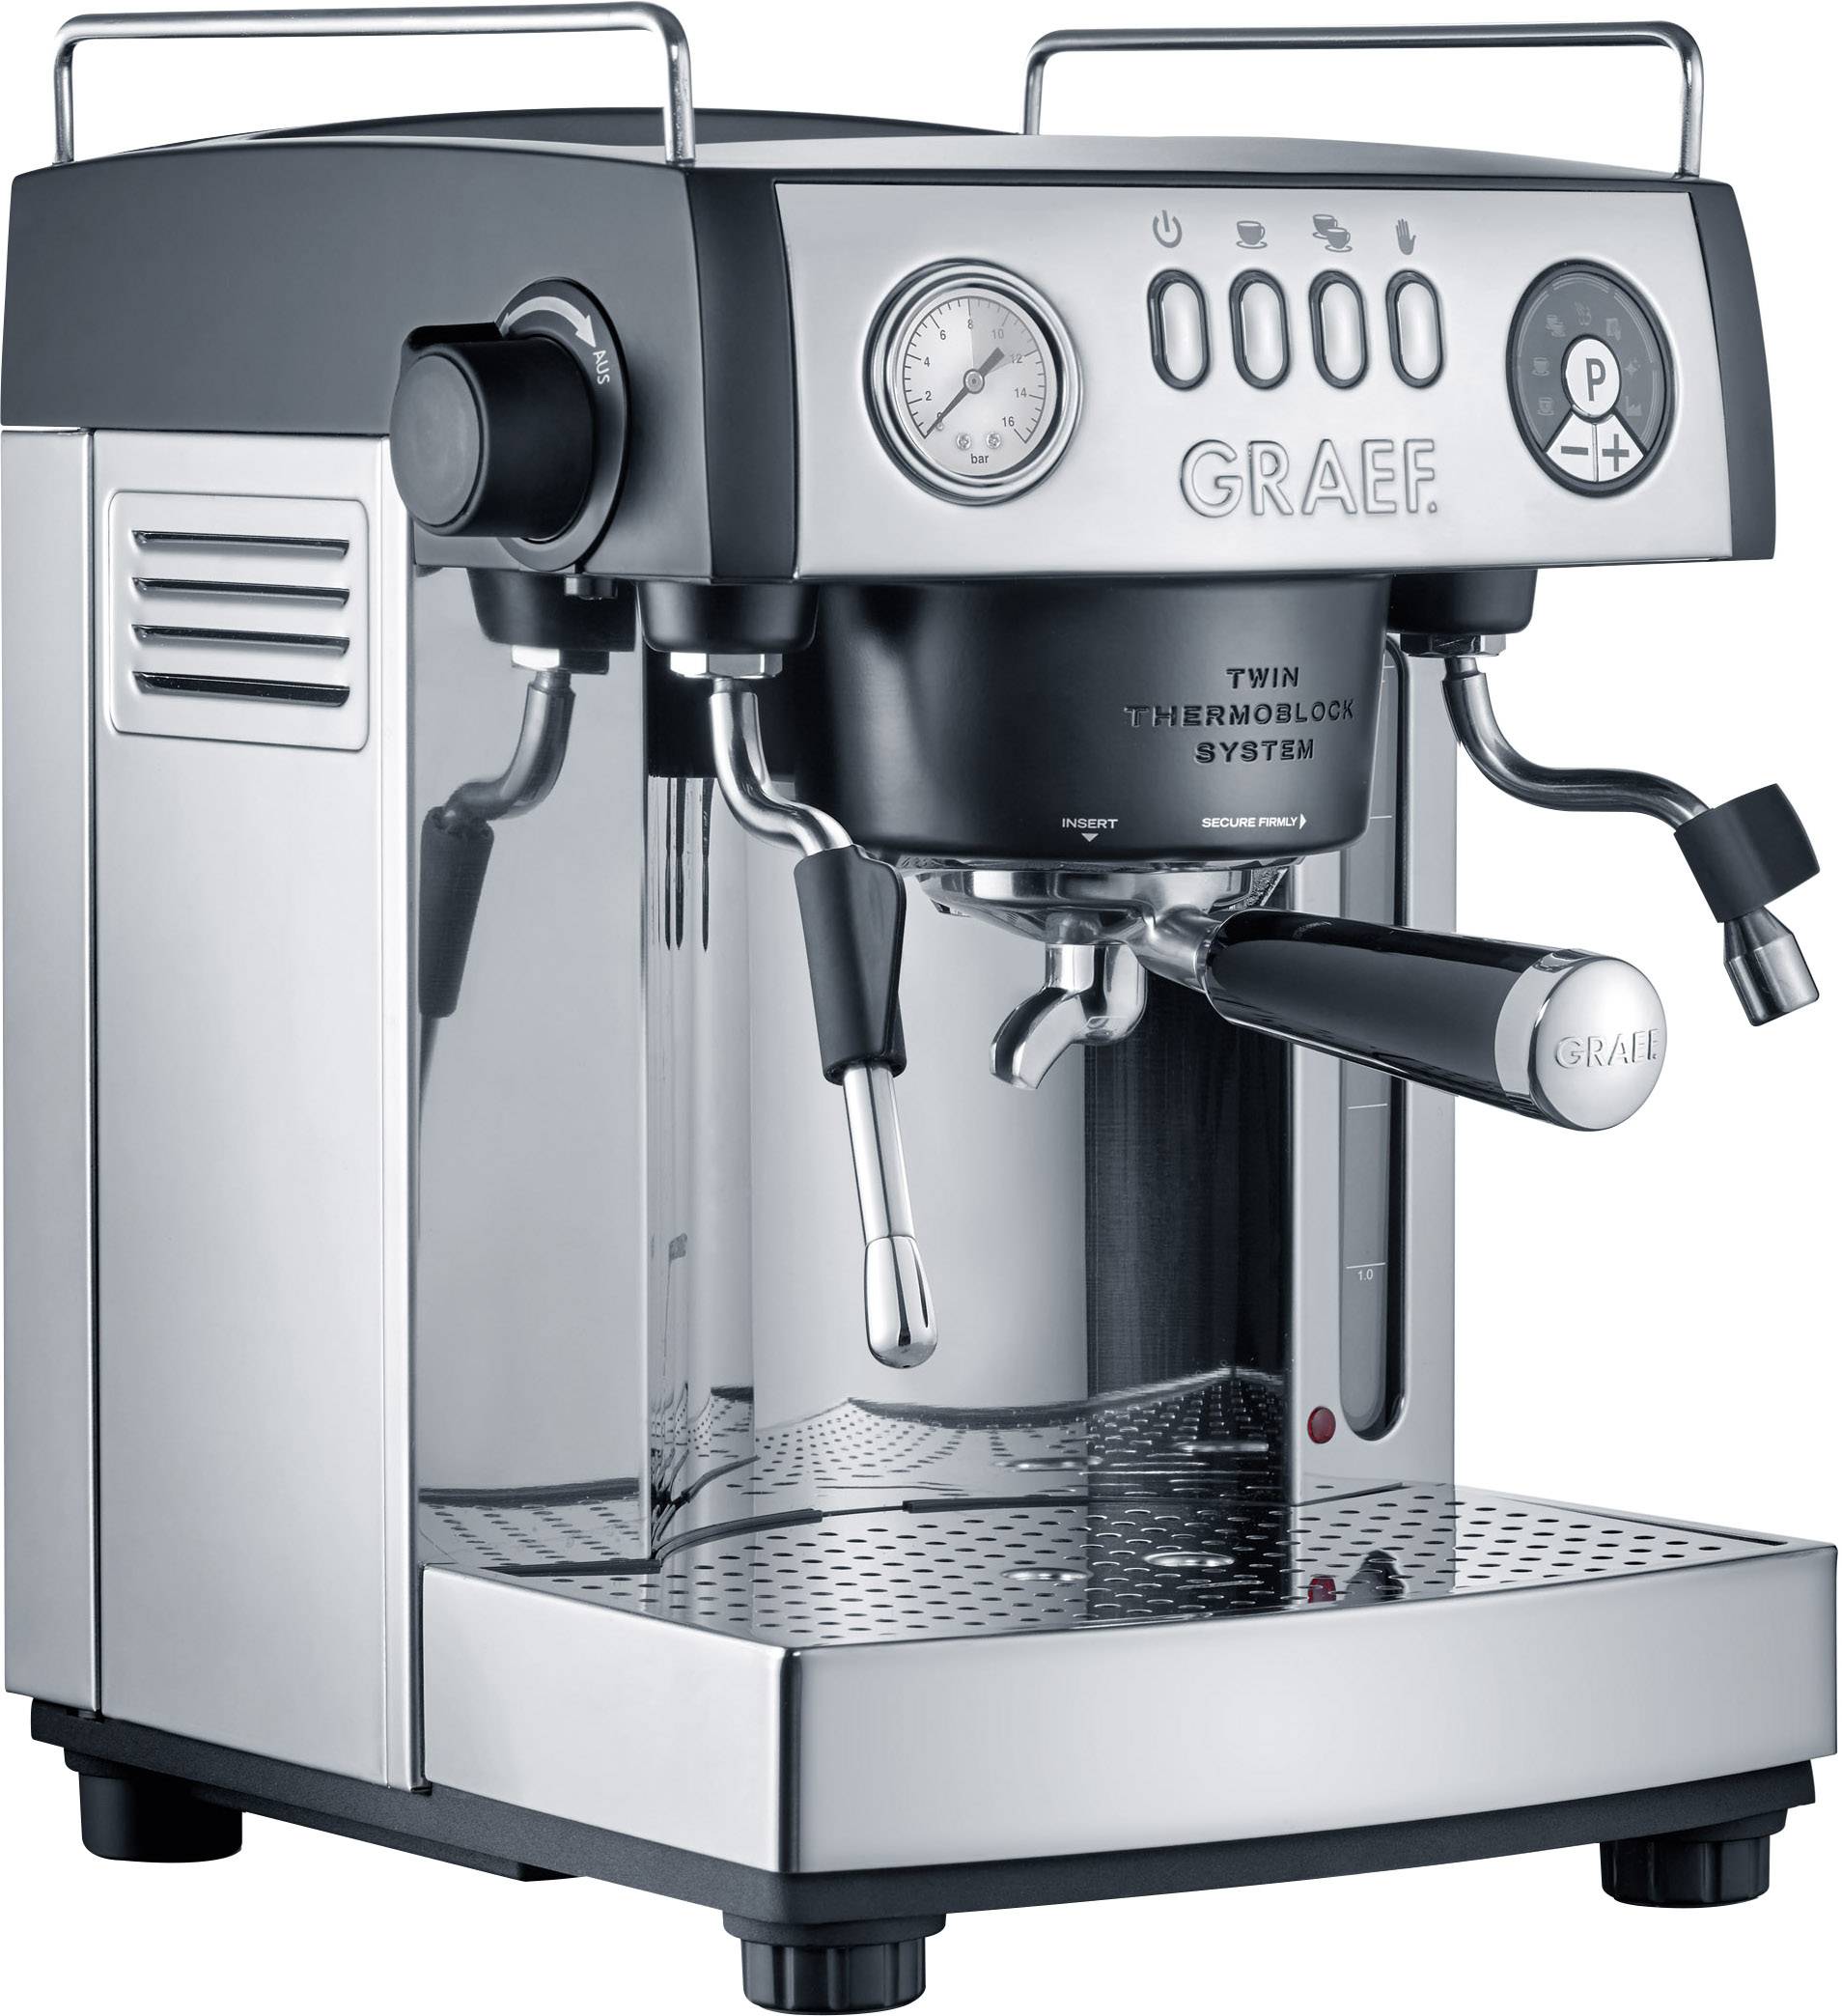 Graef ES902EU Espresso machine with sump filter holder Stainless steel, Black 2515 W incl. nozzle | Conrad.com